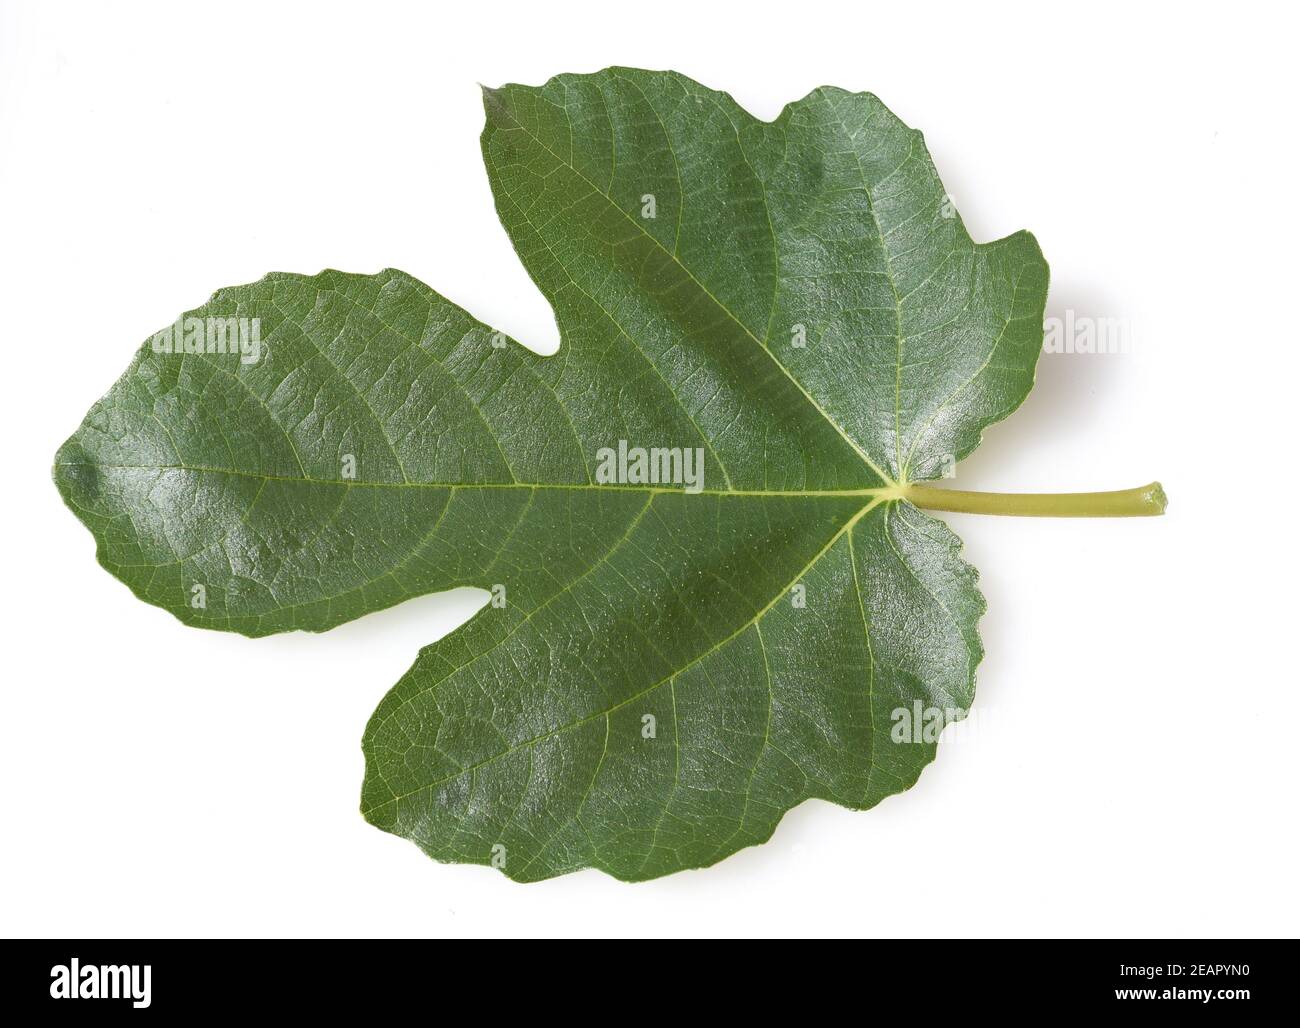 Feigenblatt, Ficus carica Stock Photo